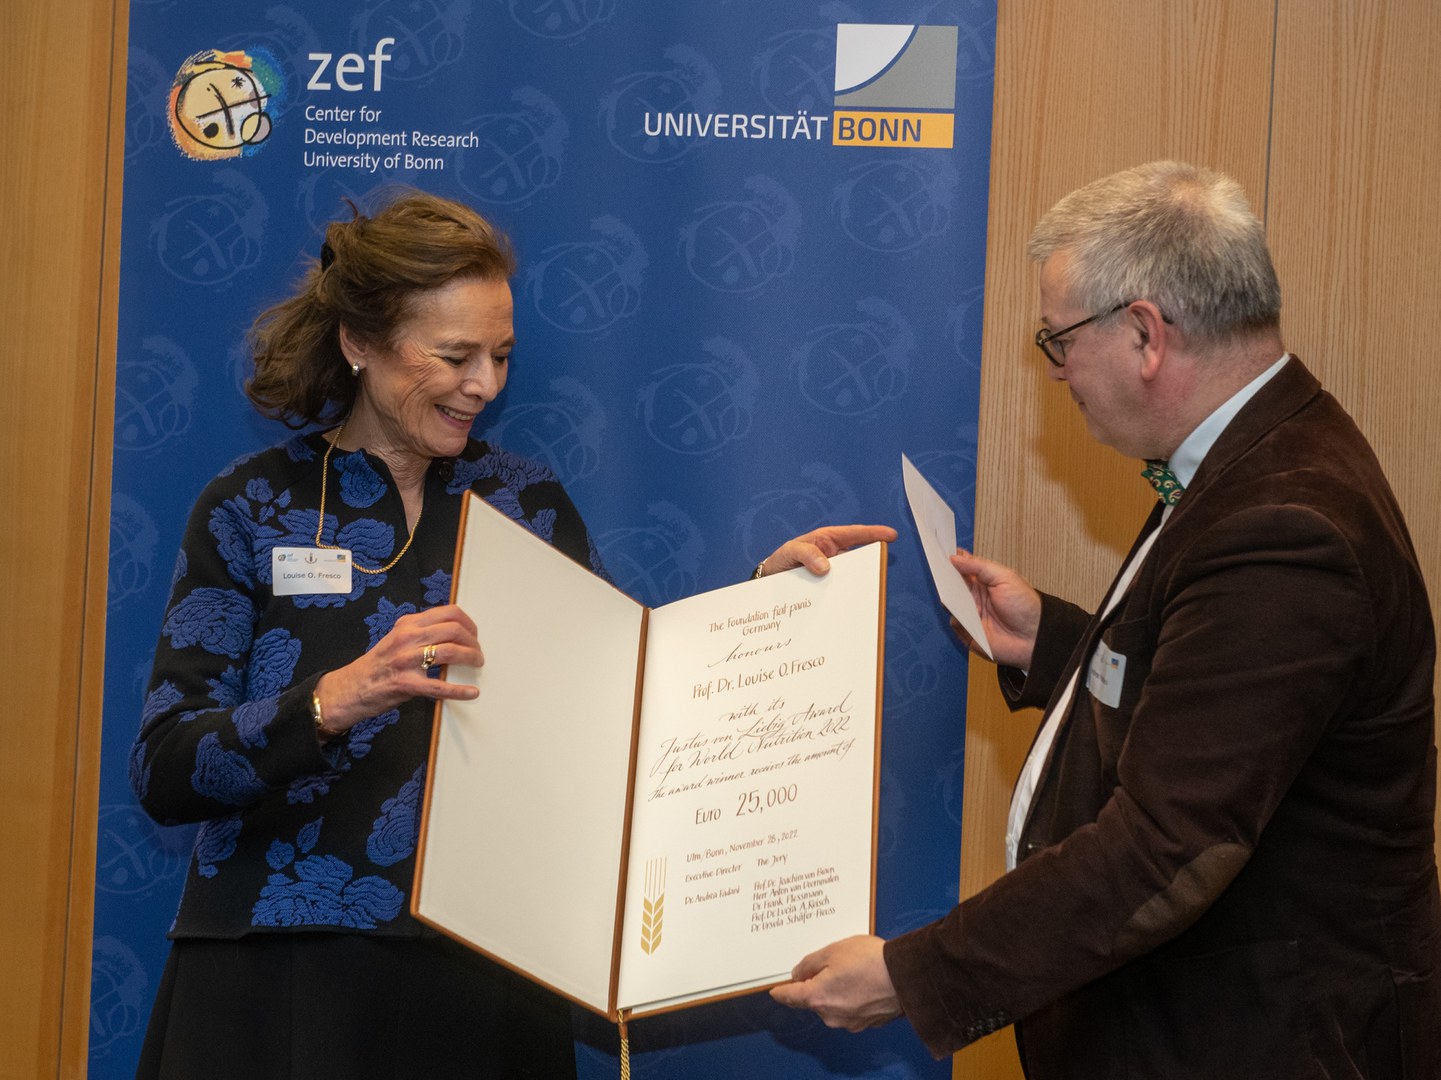 Award ceremony at ZEF, University of Bonn